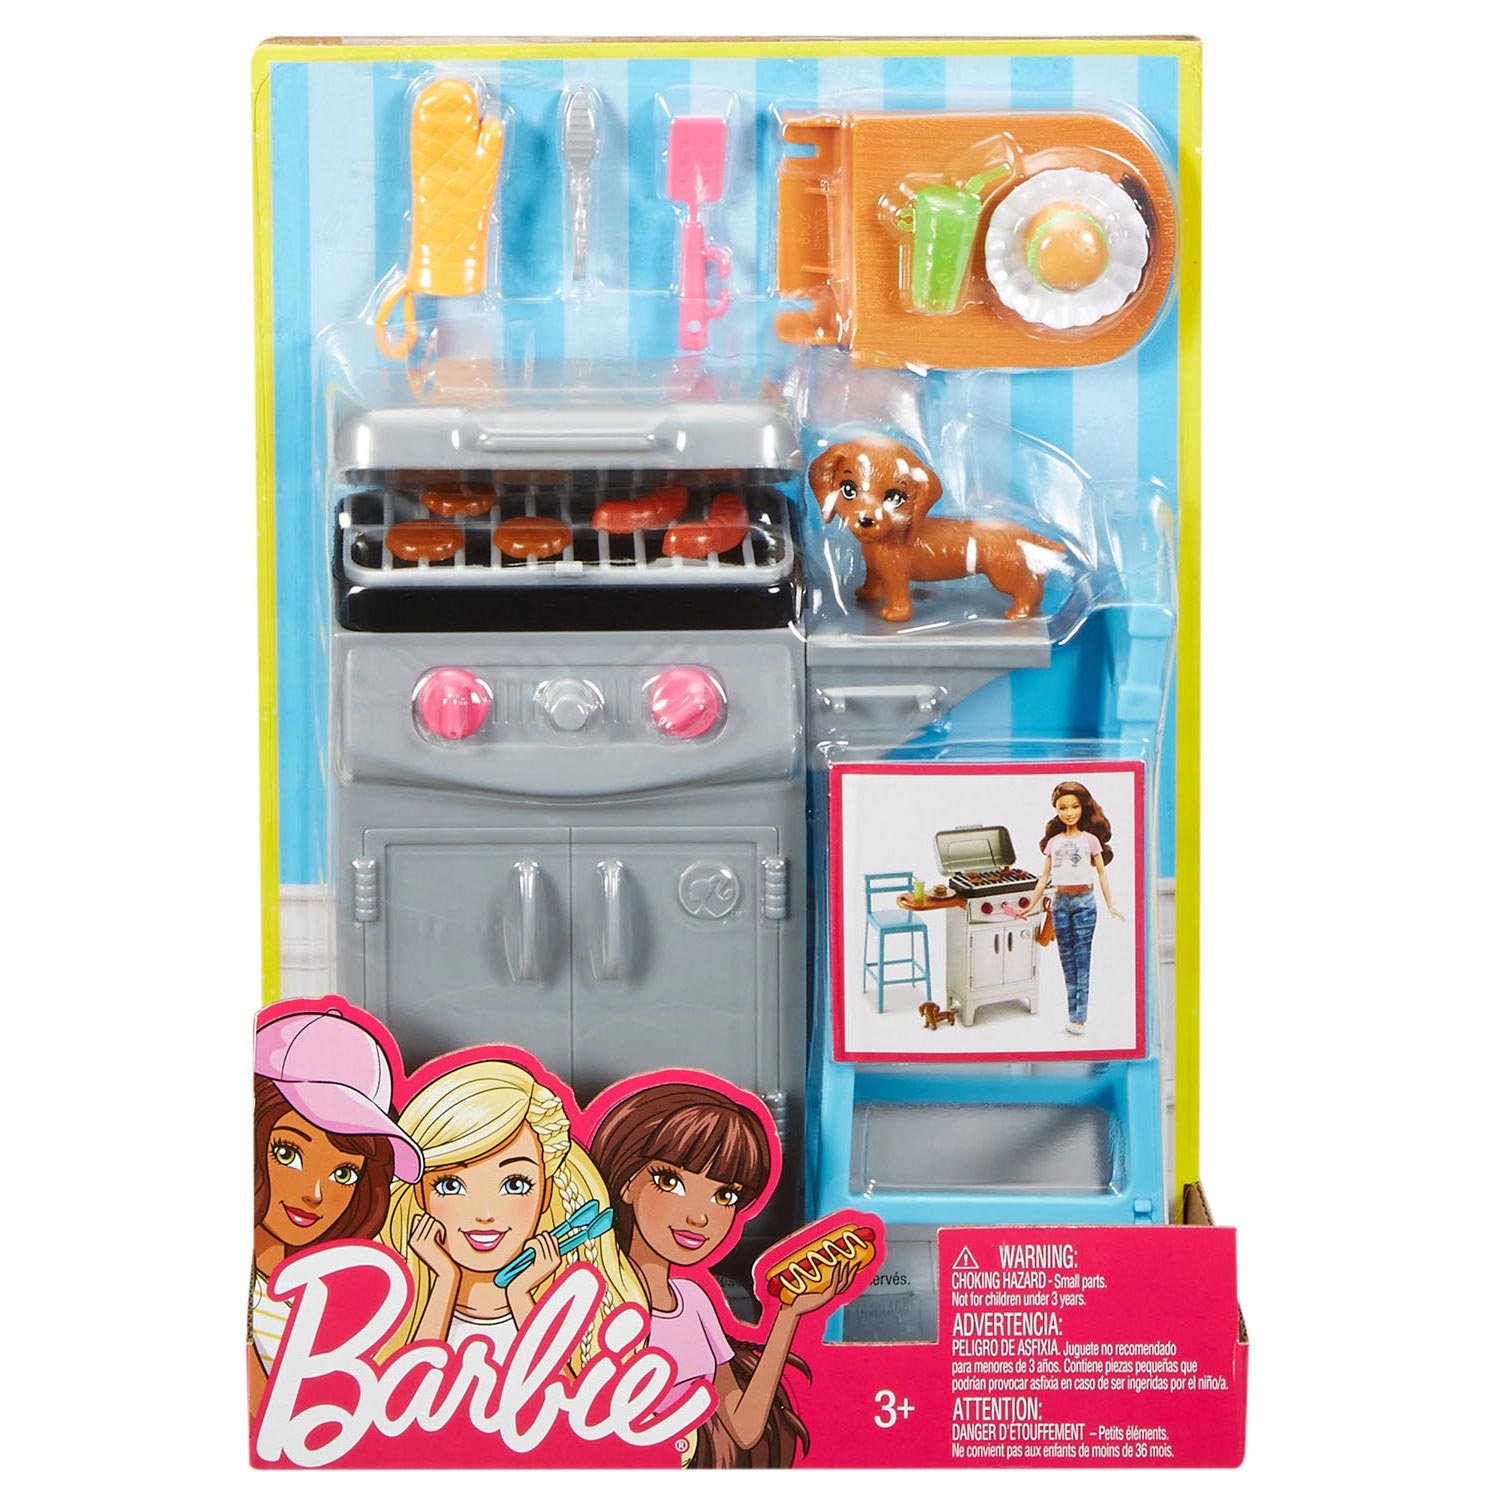 Barbie BBQ